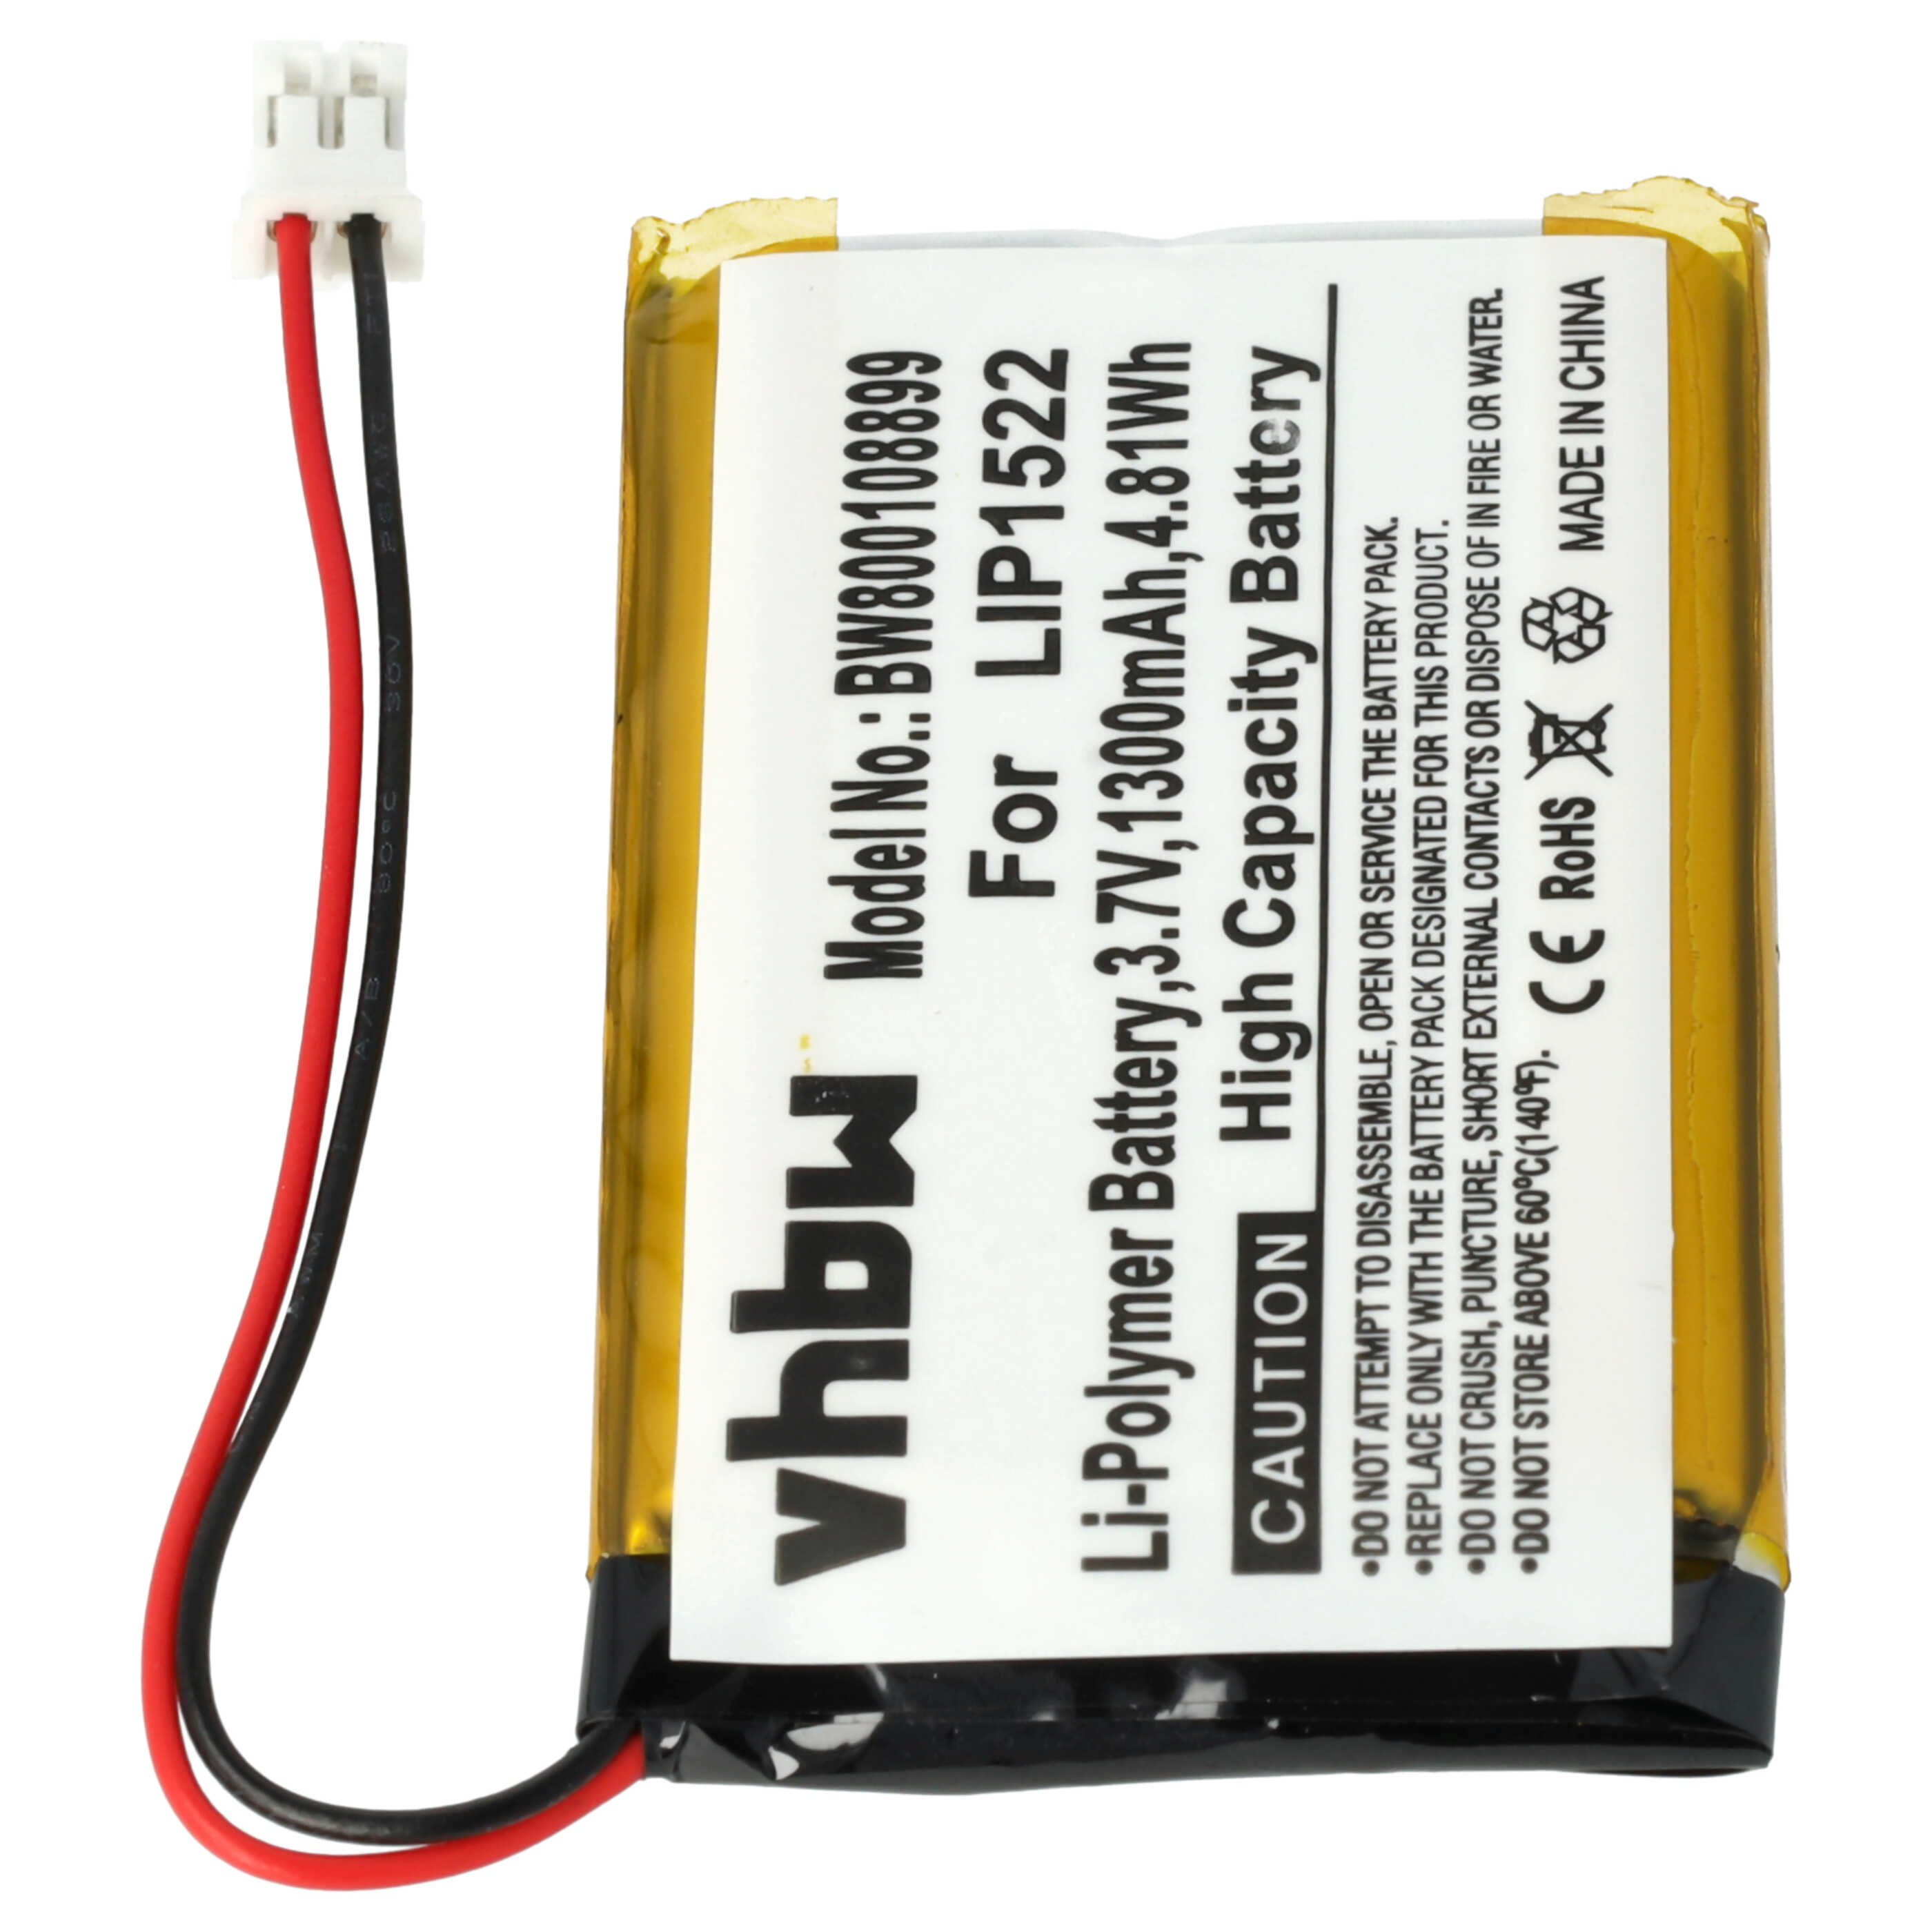 Akumulator do pada zamiennik Sony LIP1522, KCR1410 - 1300 mAh 3,7 V Li-Ion